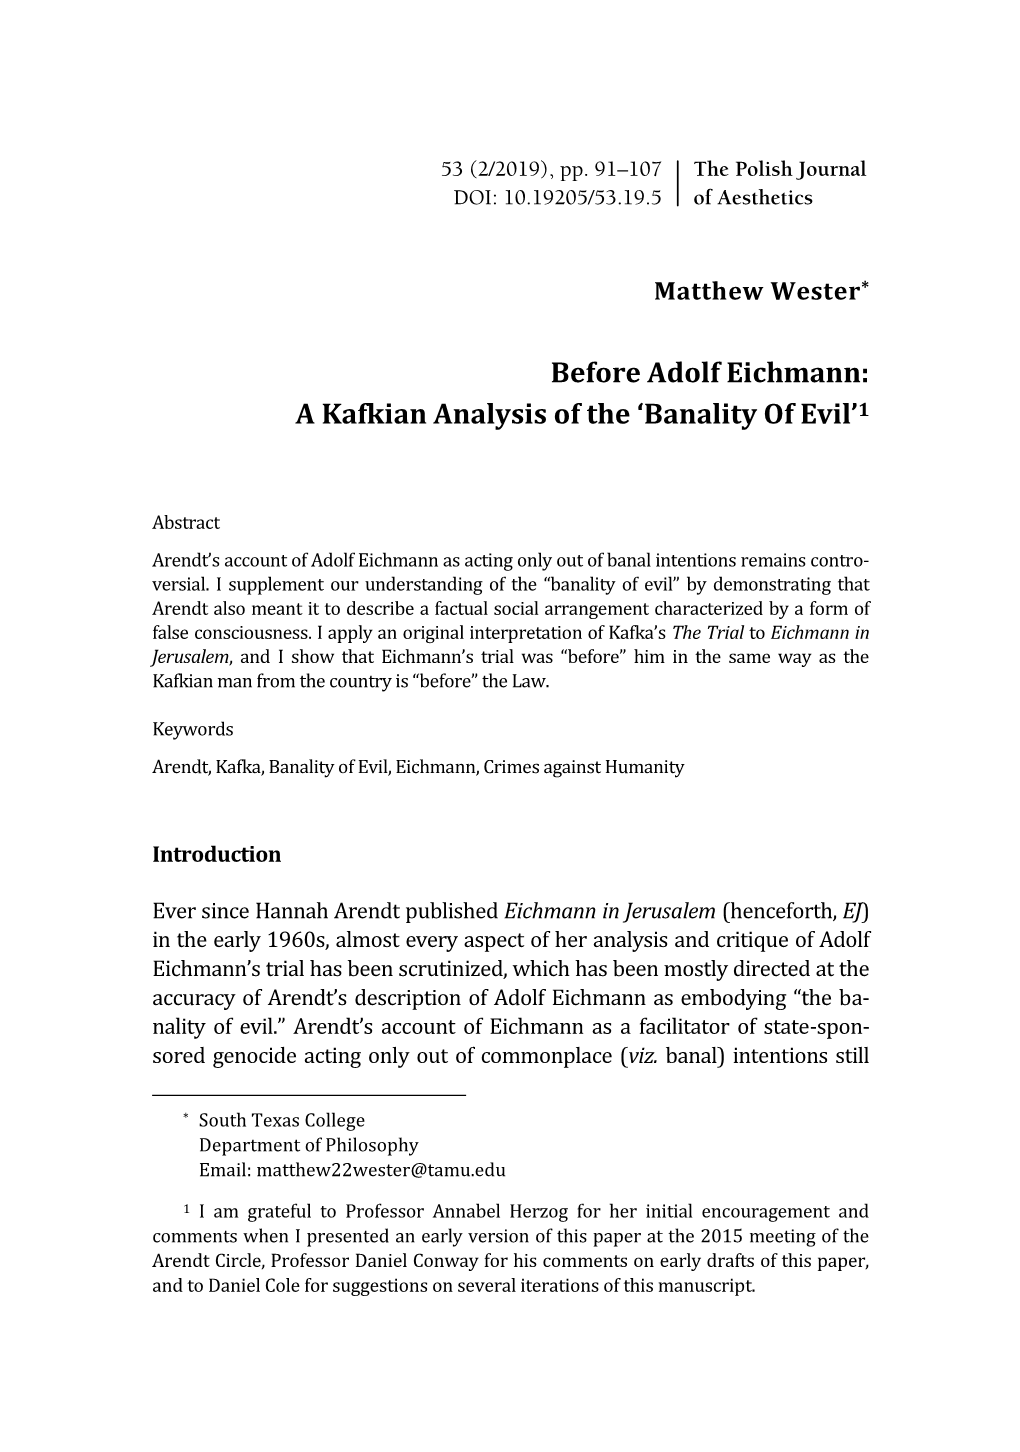 Before Adolf Eichmann: a Kafkian Analysis of the ‘Banality of Evil’1